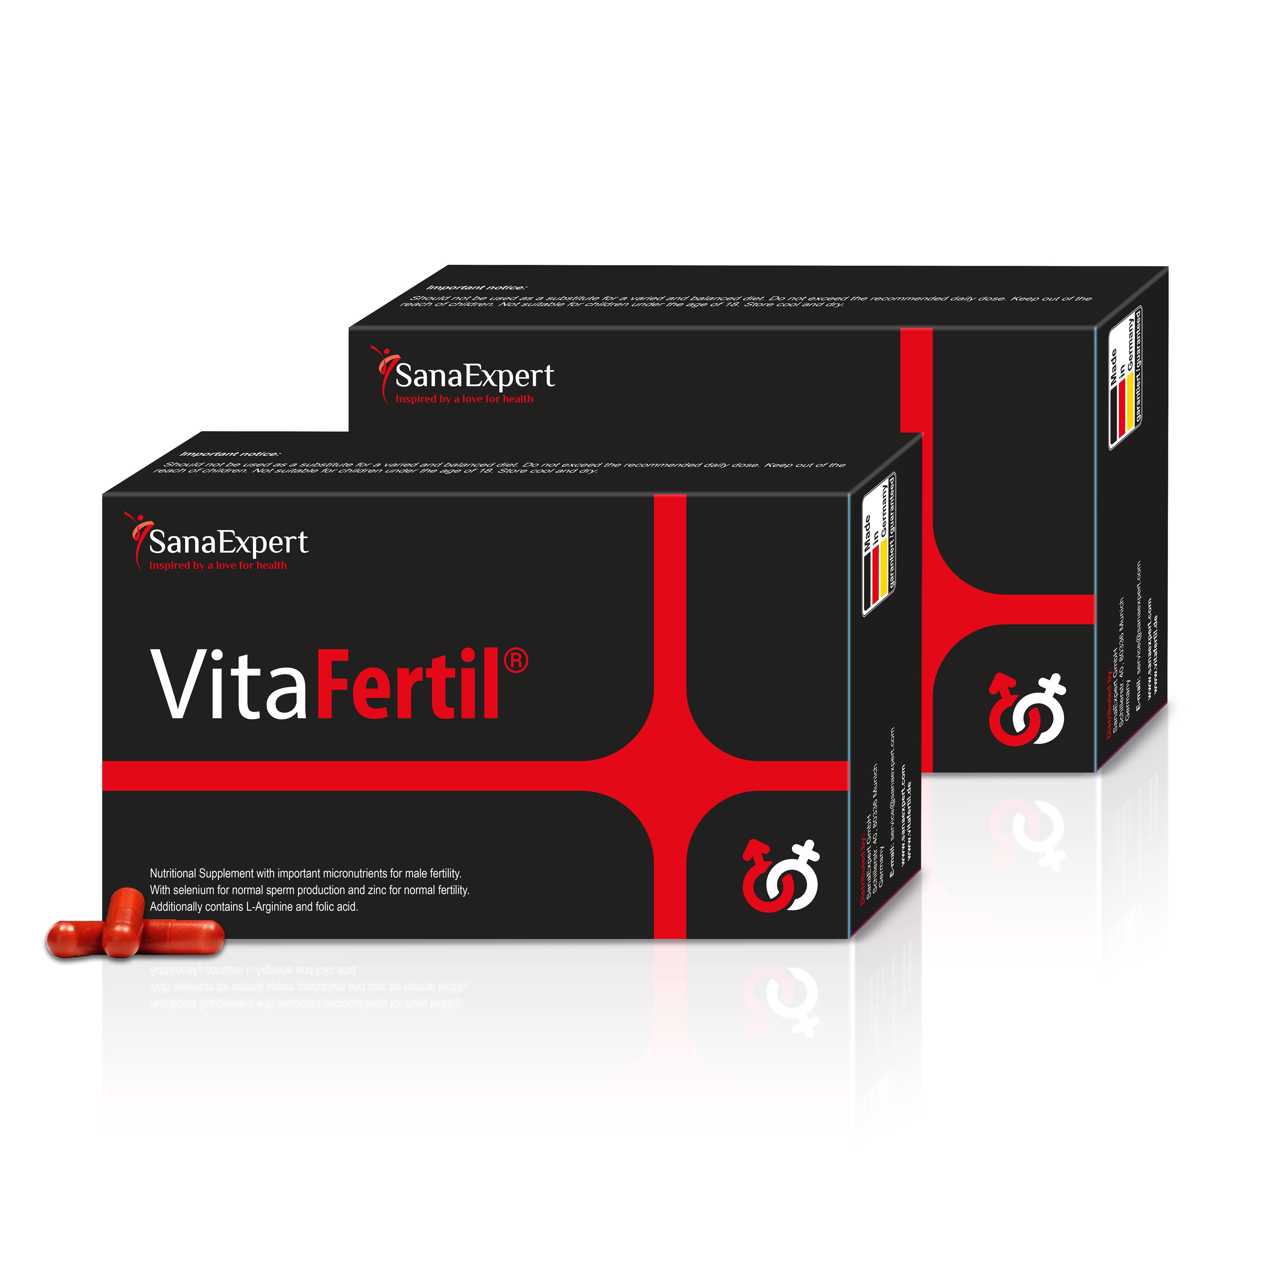 Pack 2 SanaExpert VitaFertil due confezioni integratore per fertilità maschile